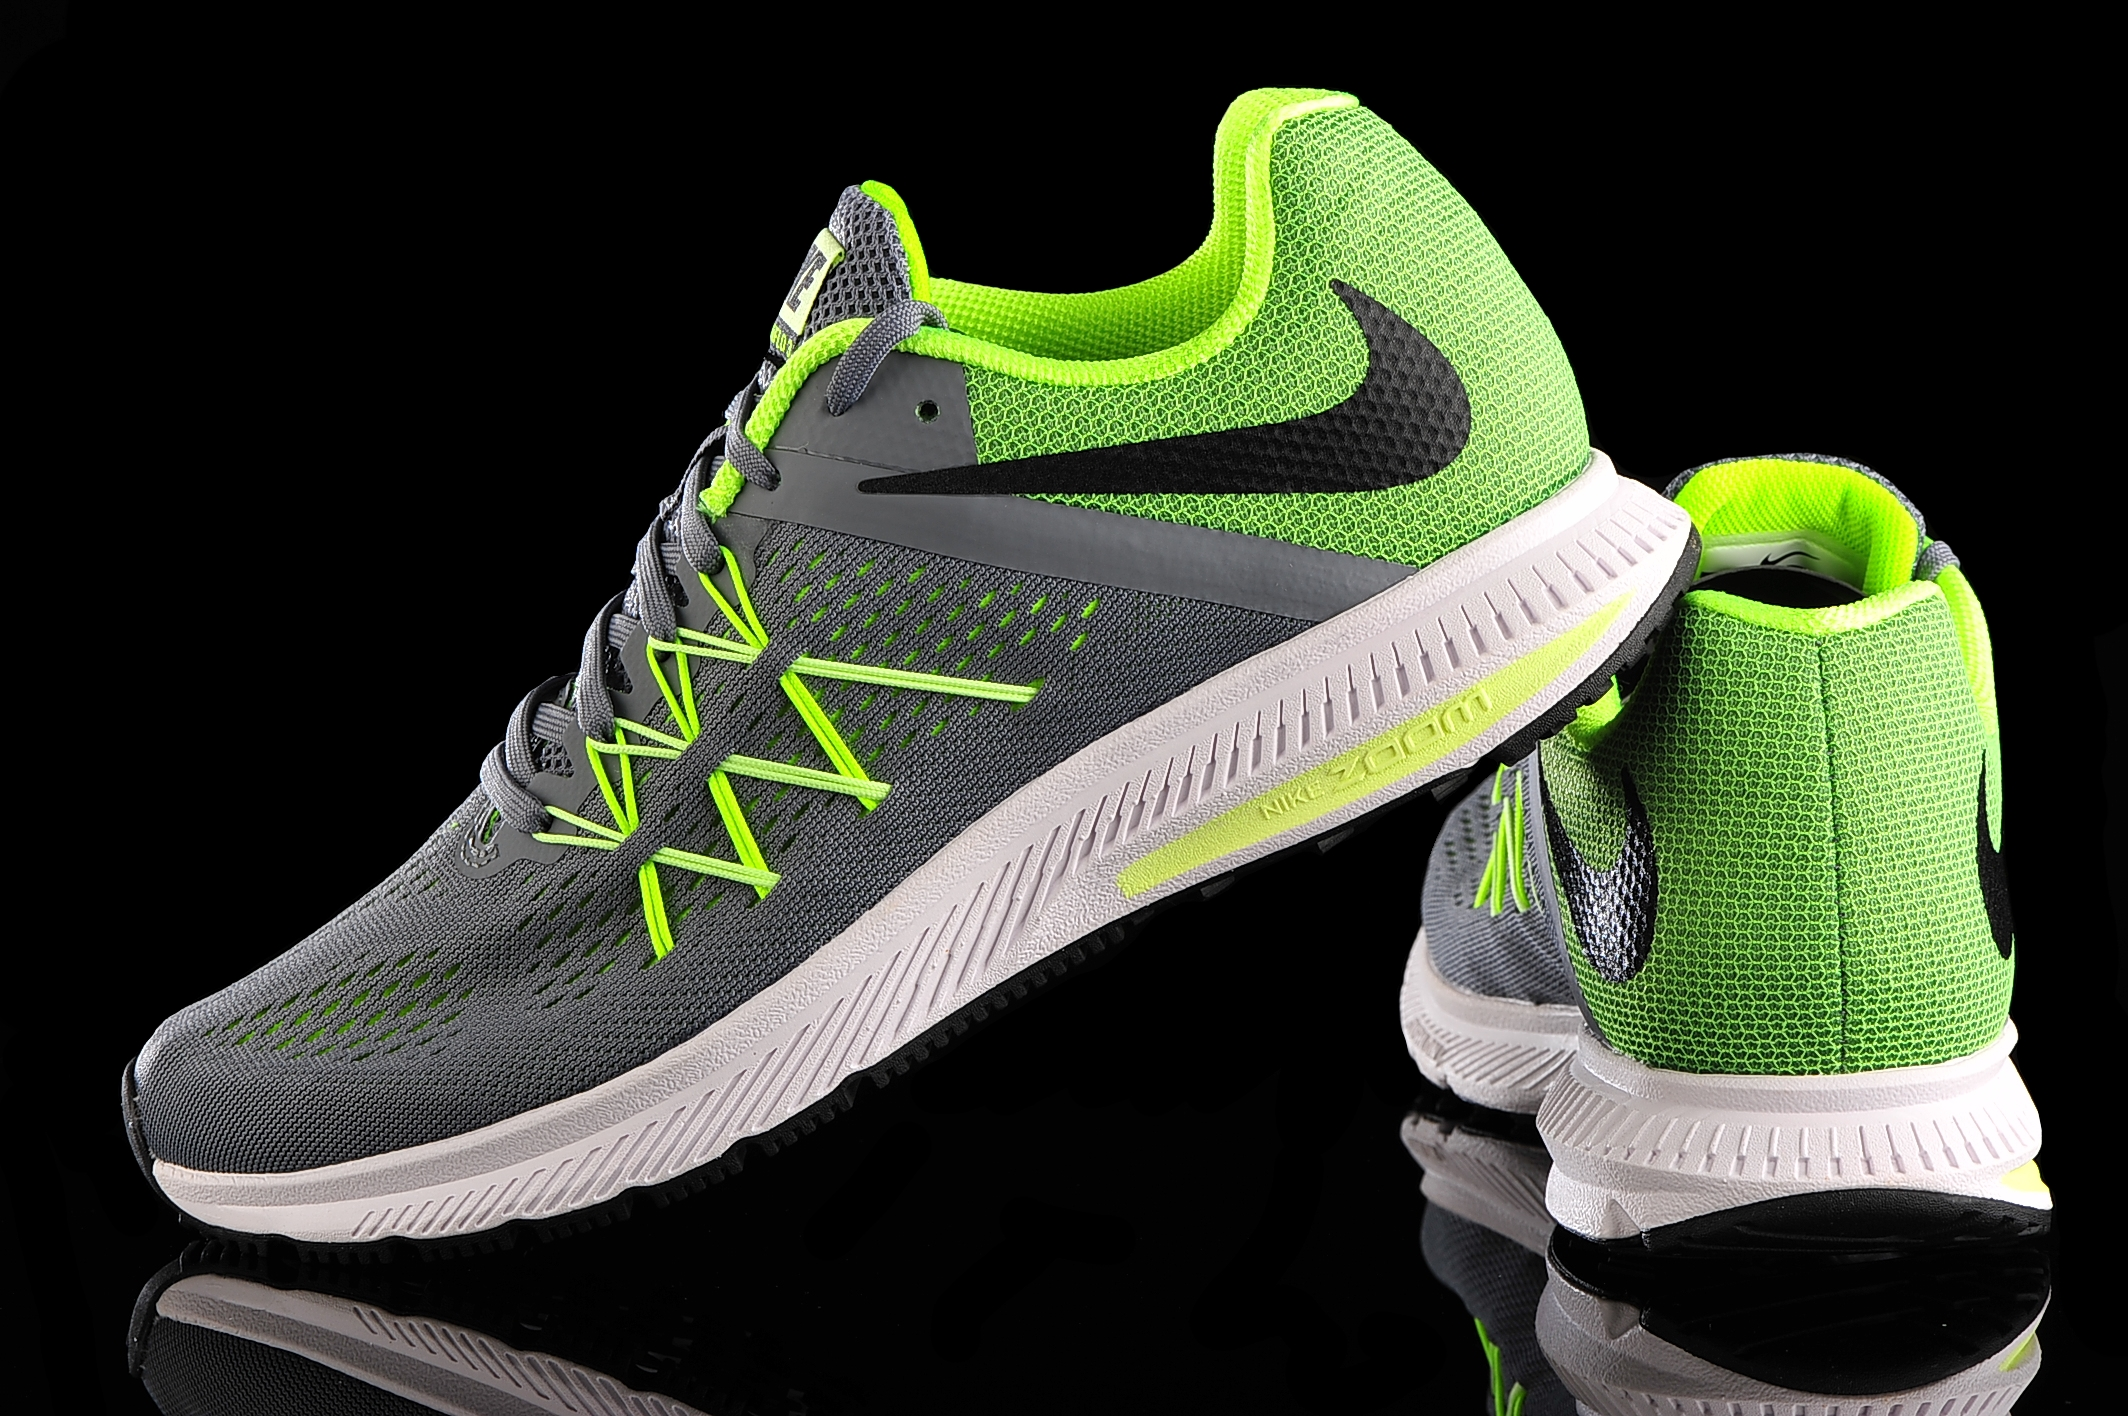 Nike Zoom Winflo 3 | R-GOL.com Football boots & equipment